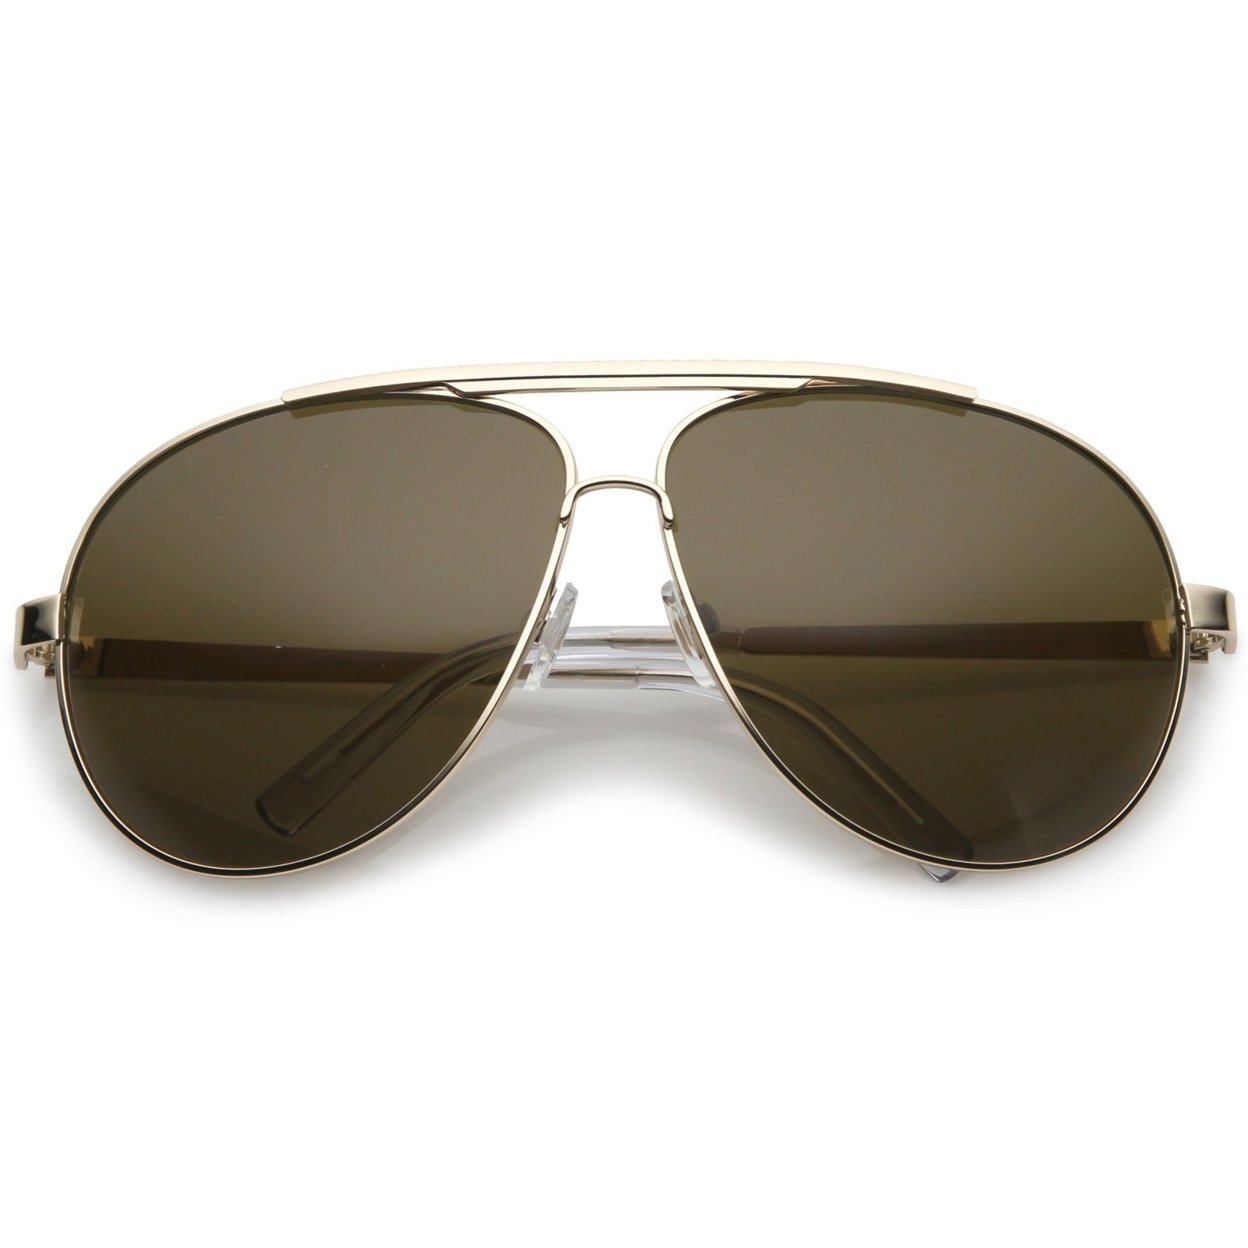 Premium Oversize Metal Aviator Sunglasses With Double Nose Bridge And Flat Top 67mm - Gunmetal / Green